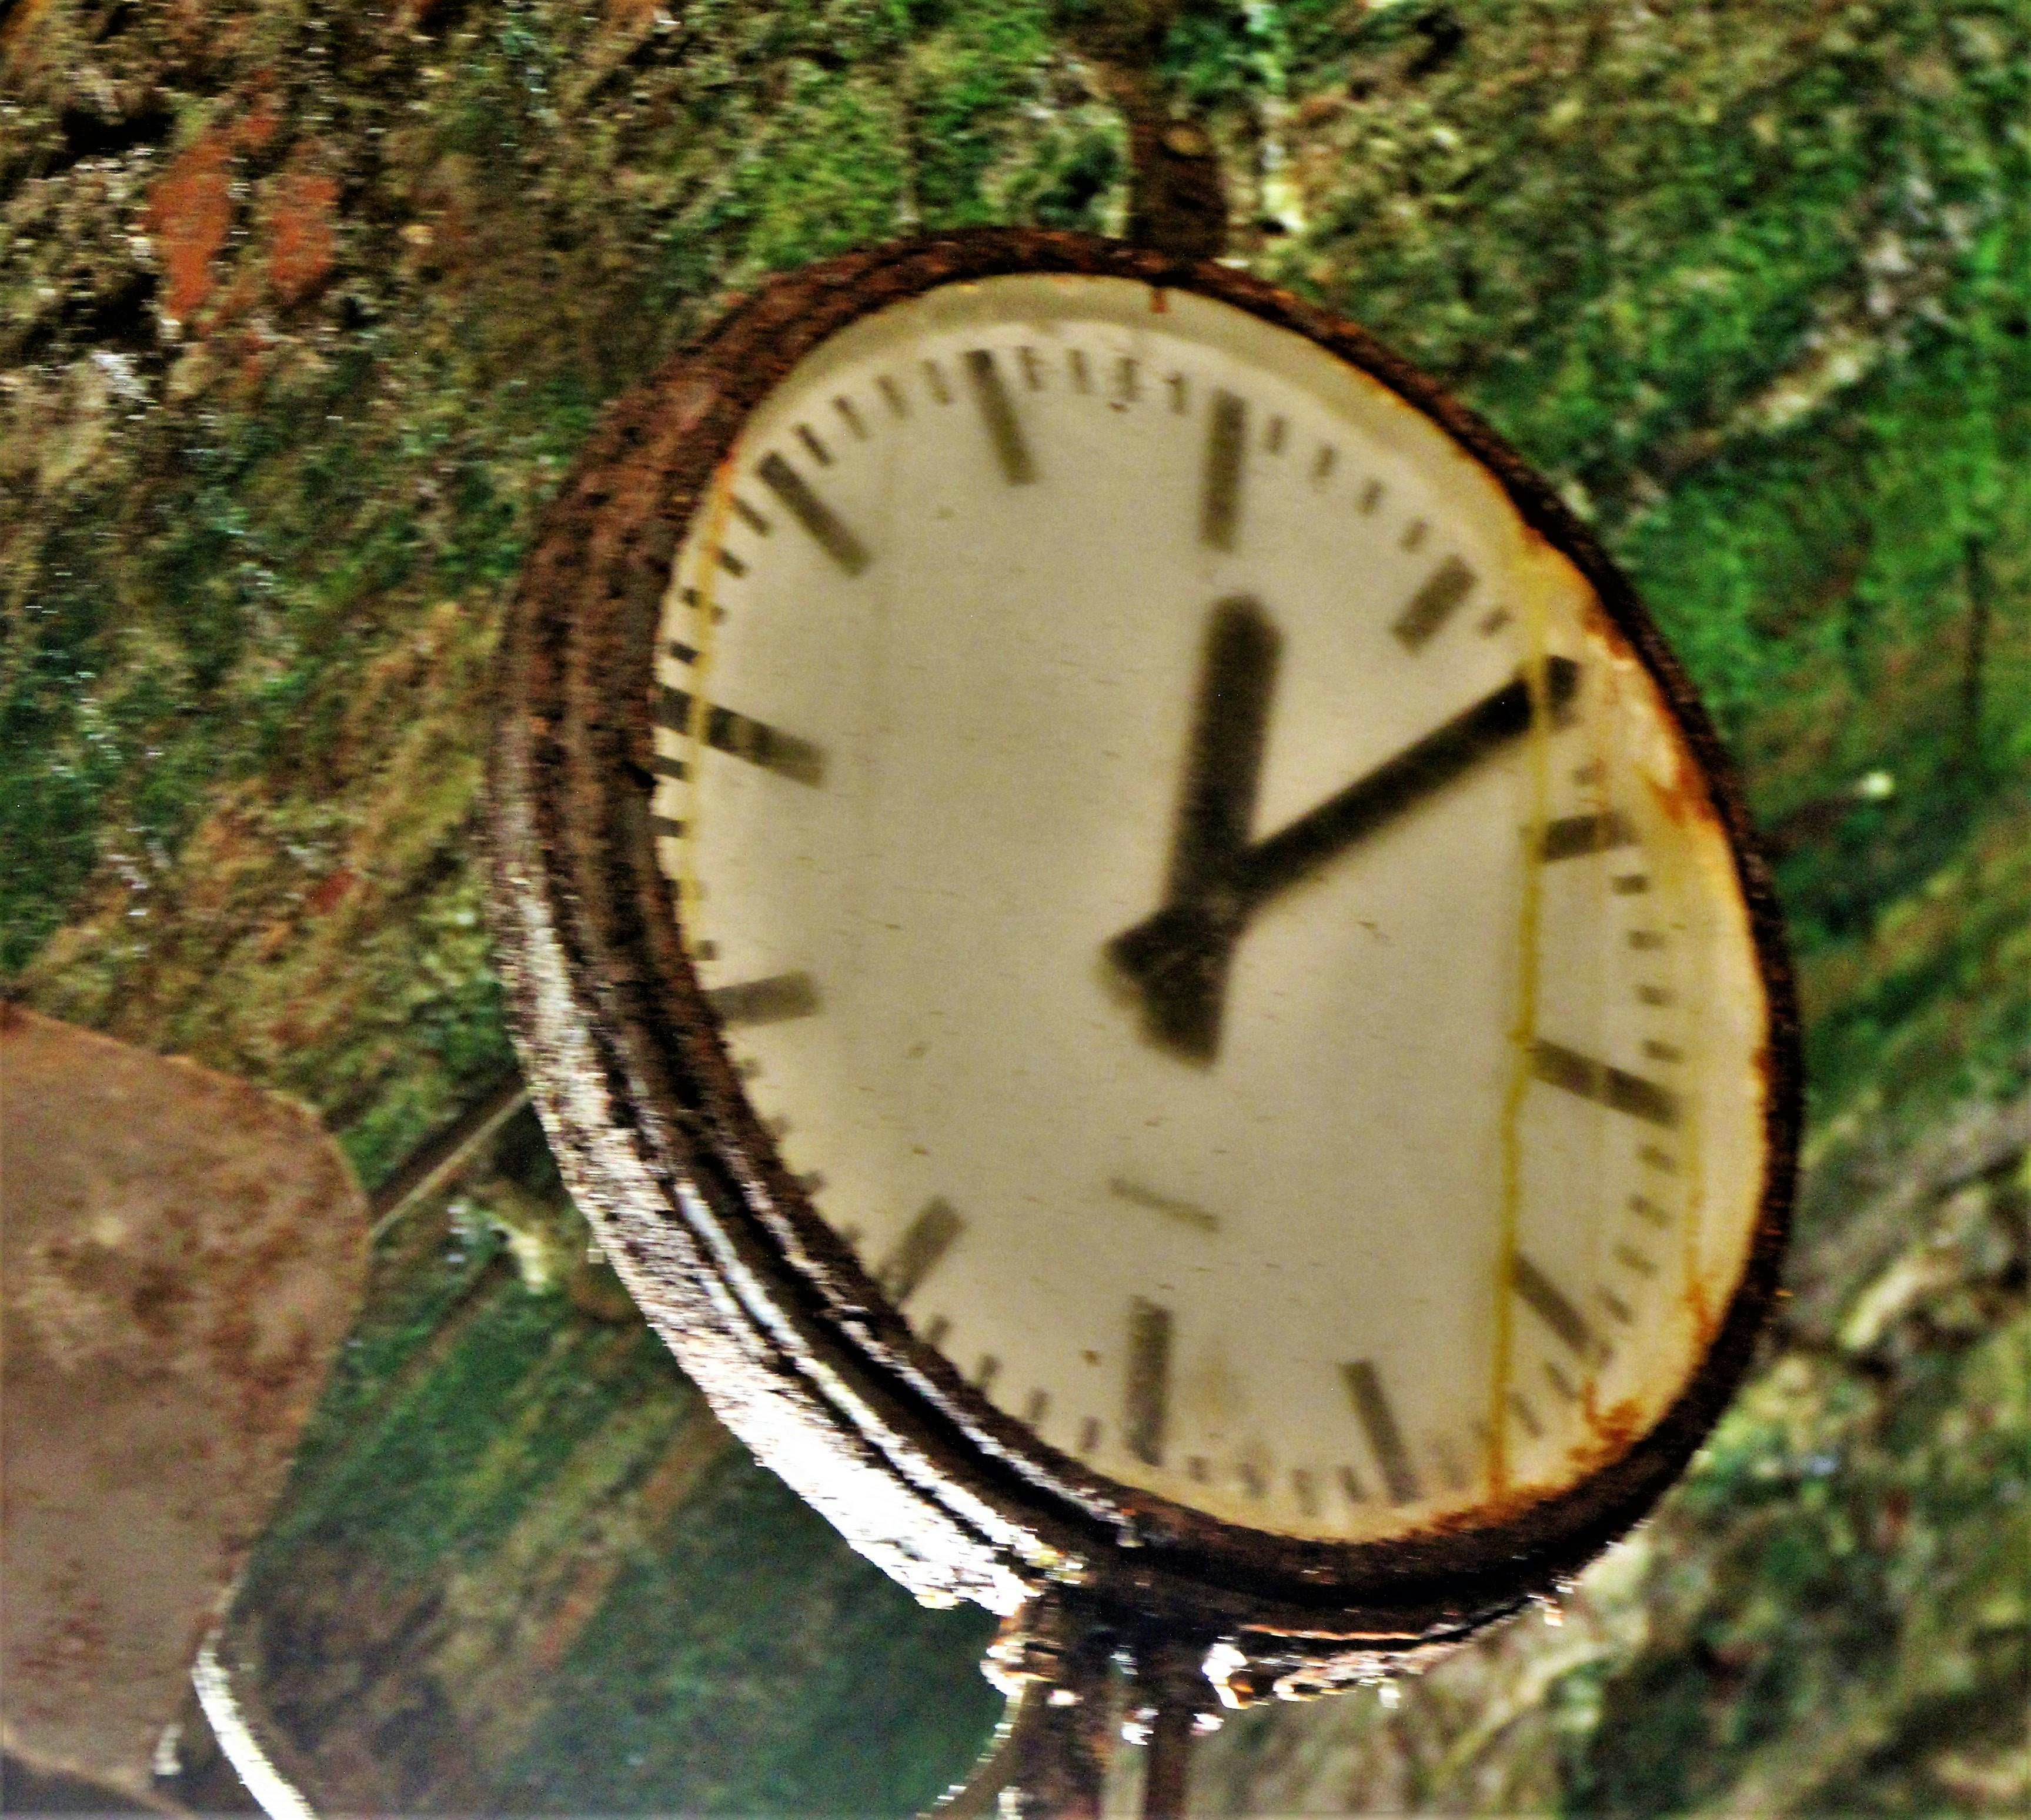 Free stock photo of analog clock, old clock